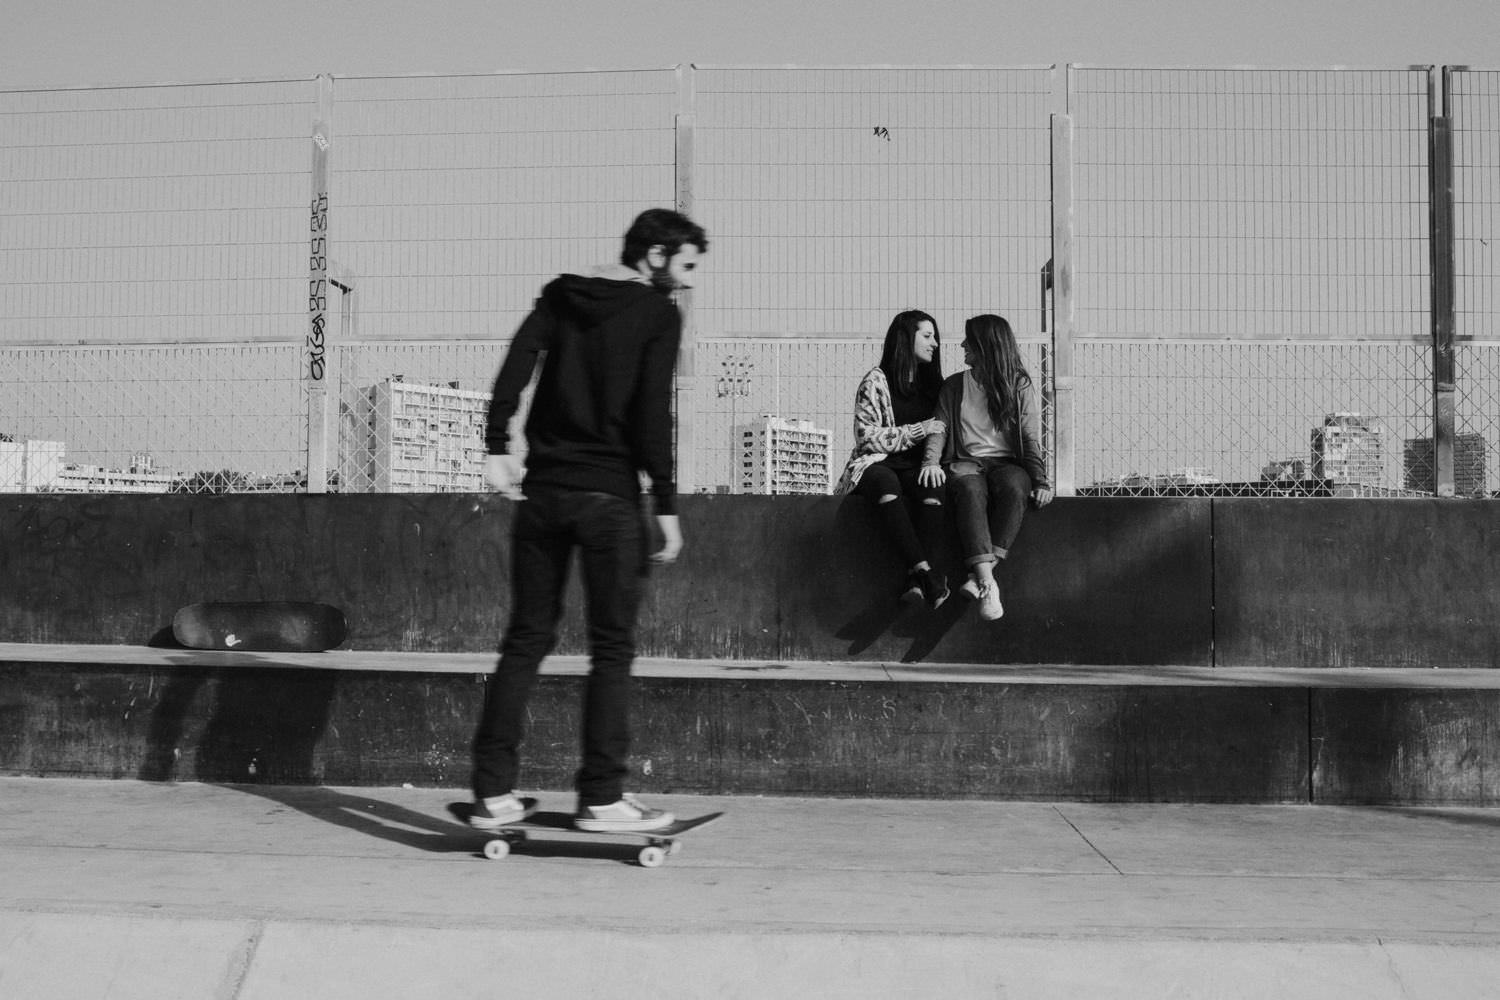 Skateboarder engagement session in Barcelona 0397